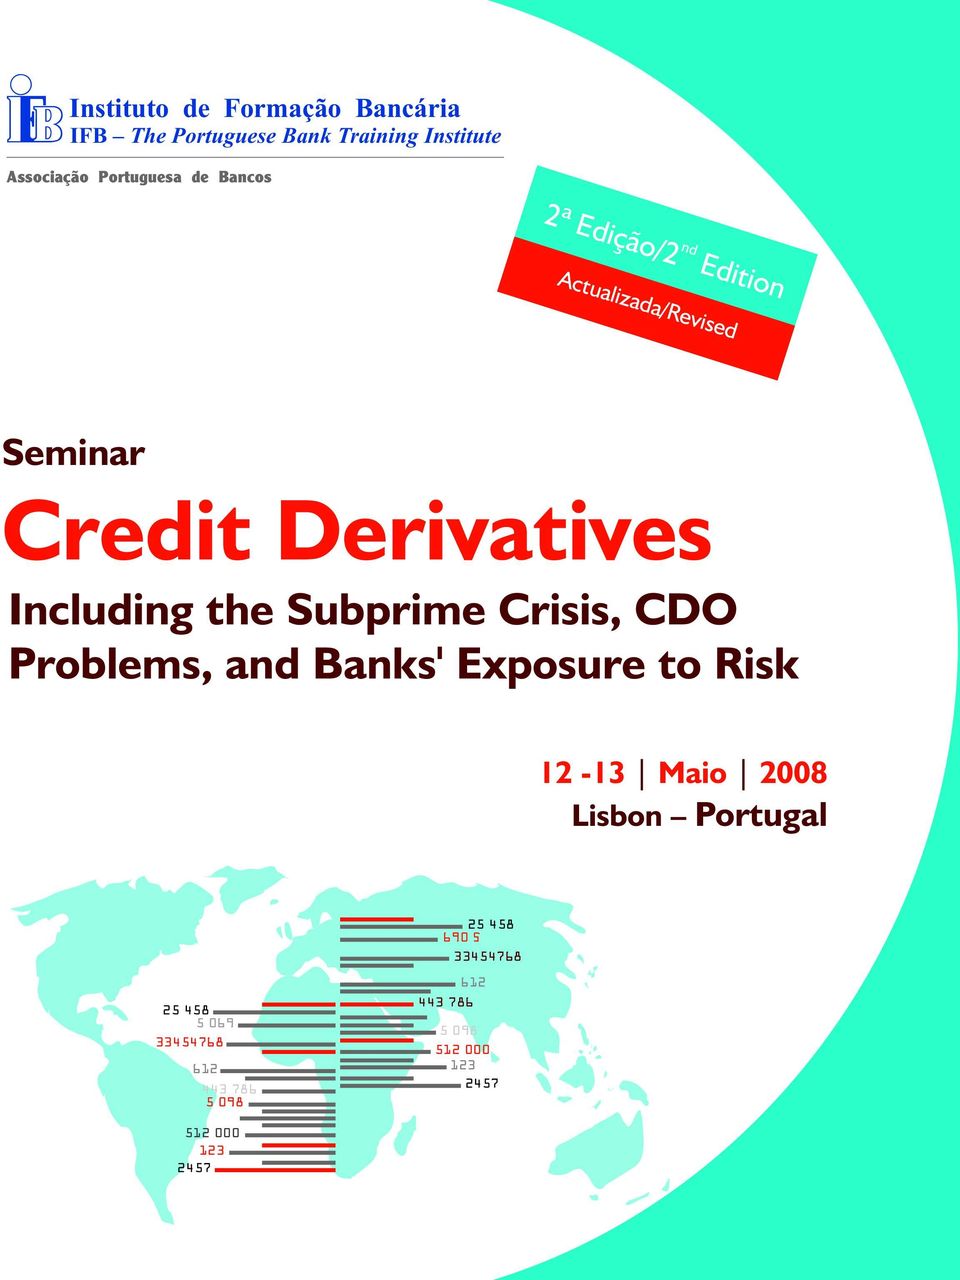 Subprime Crisis, CDO Problems, and Banks' Exposure to Risk 12-13 Maio 2008 Lisbon Portugal 25 458